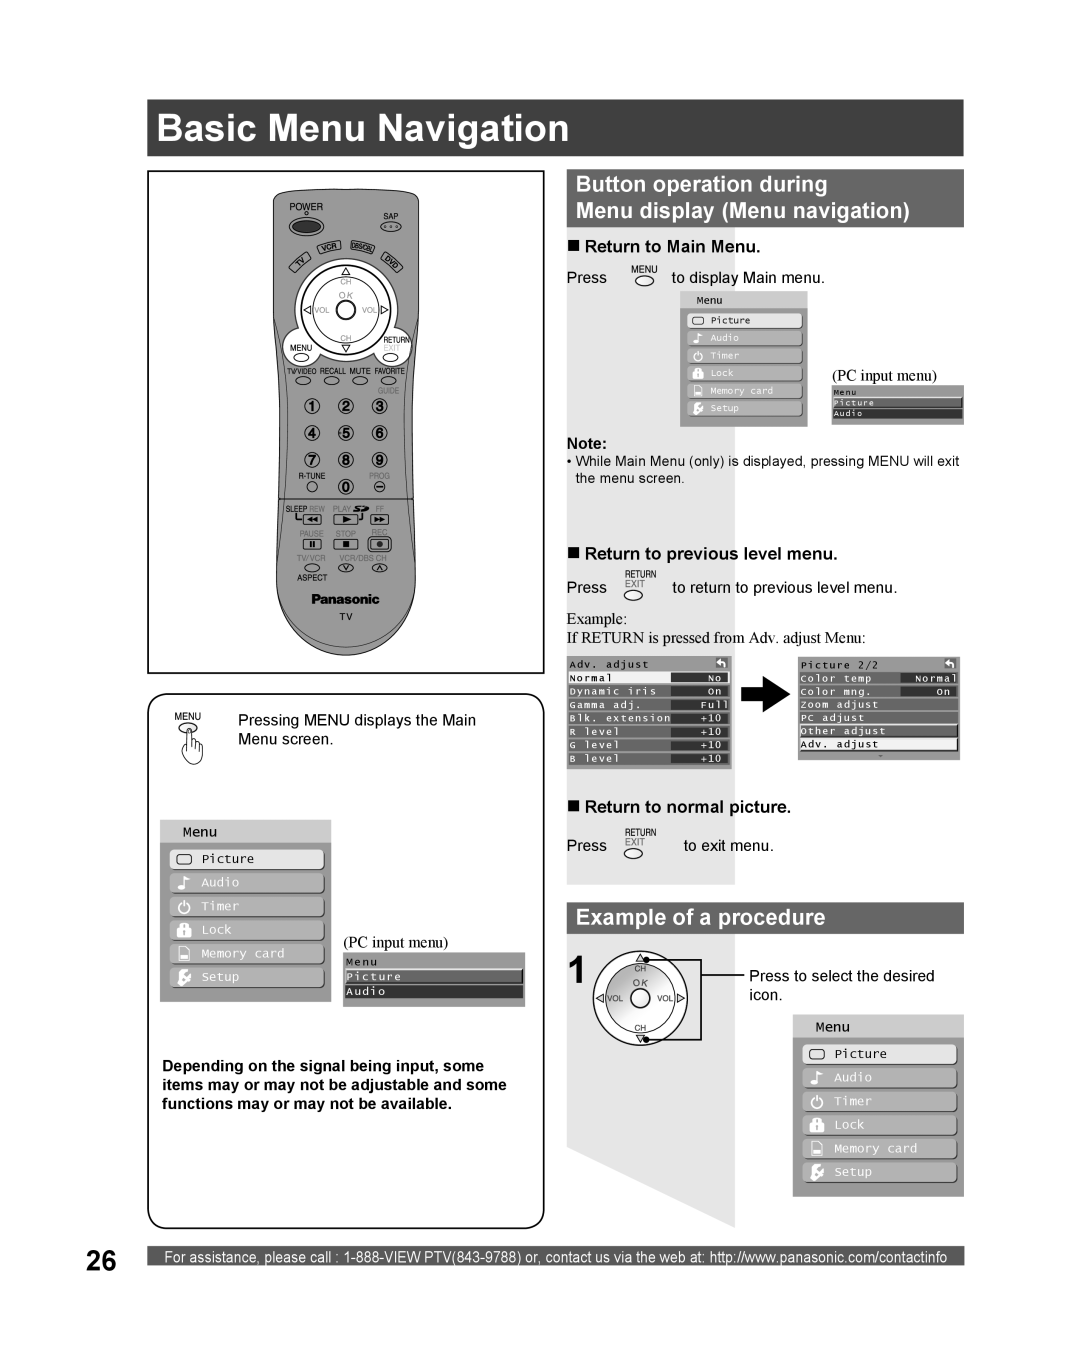 Panasonic PT-56LCX16 Basic Menu Navigation, Button operation during Menu display Menu navigation, Example of a procedure 